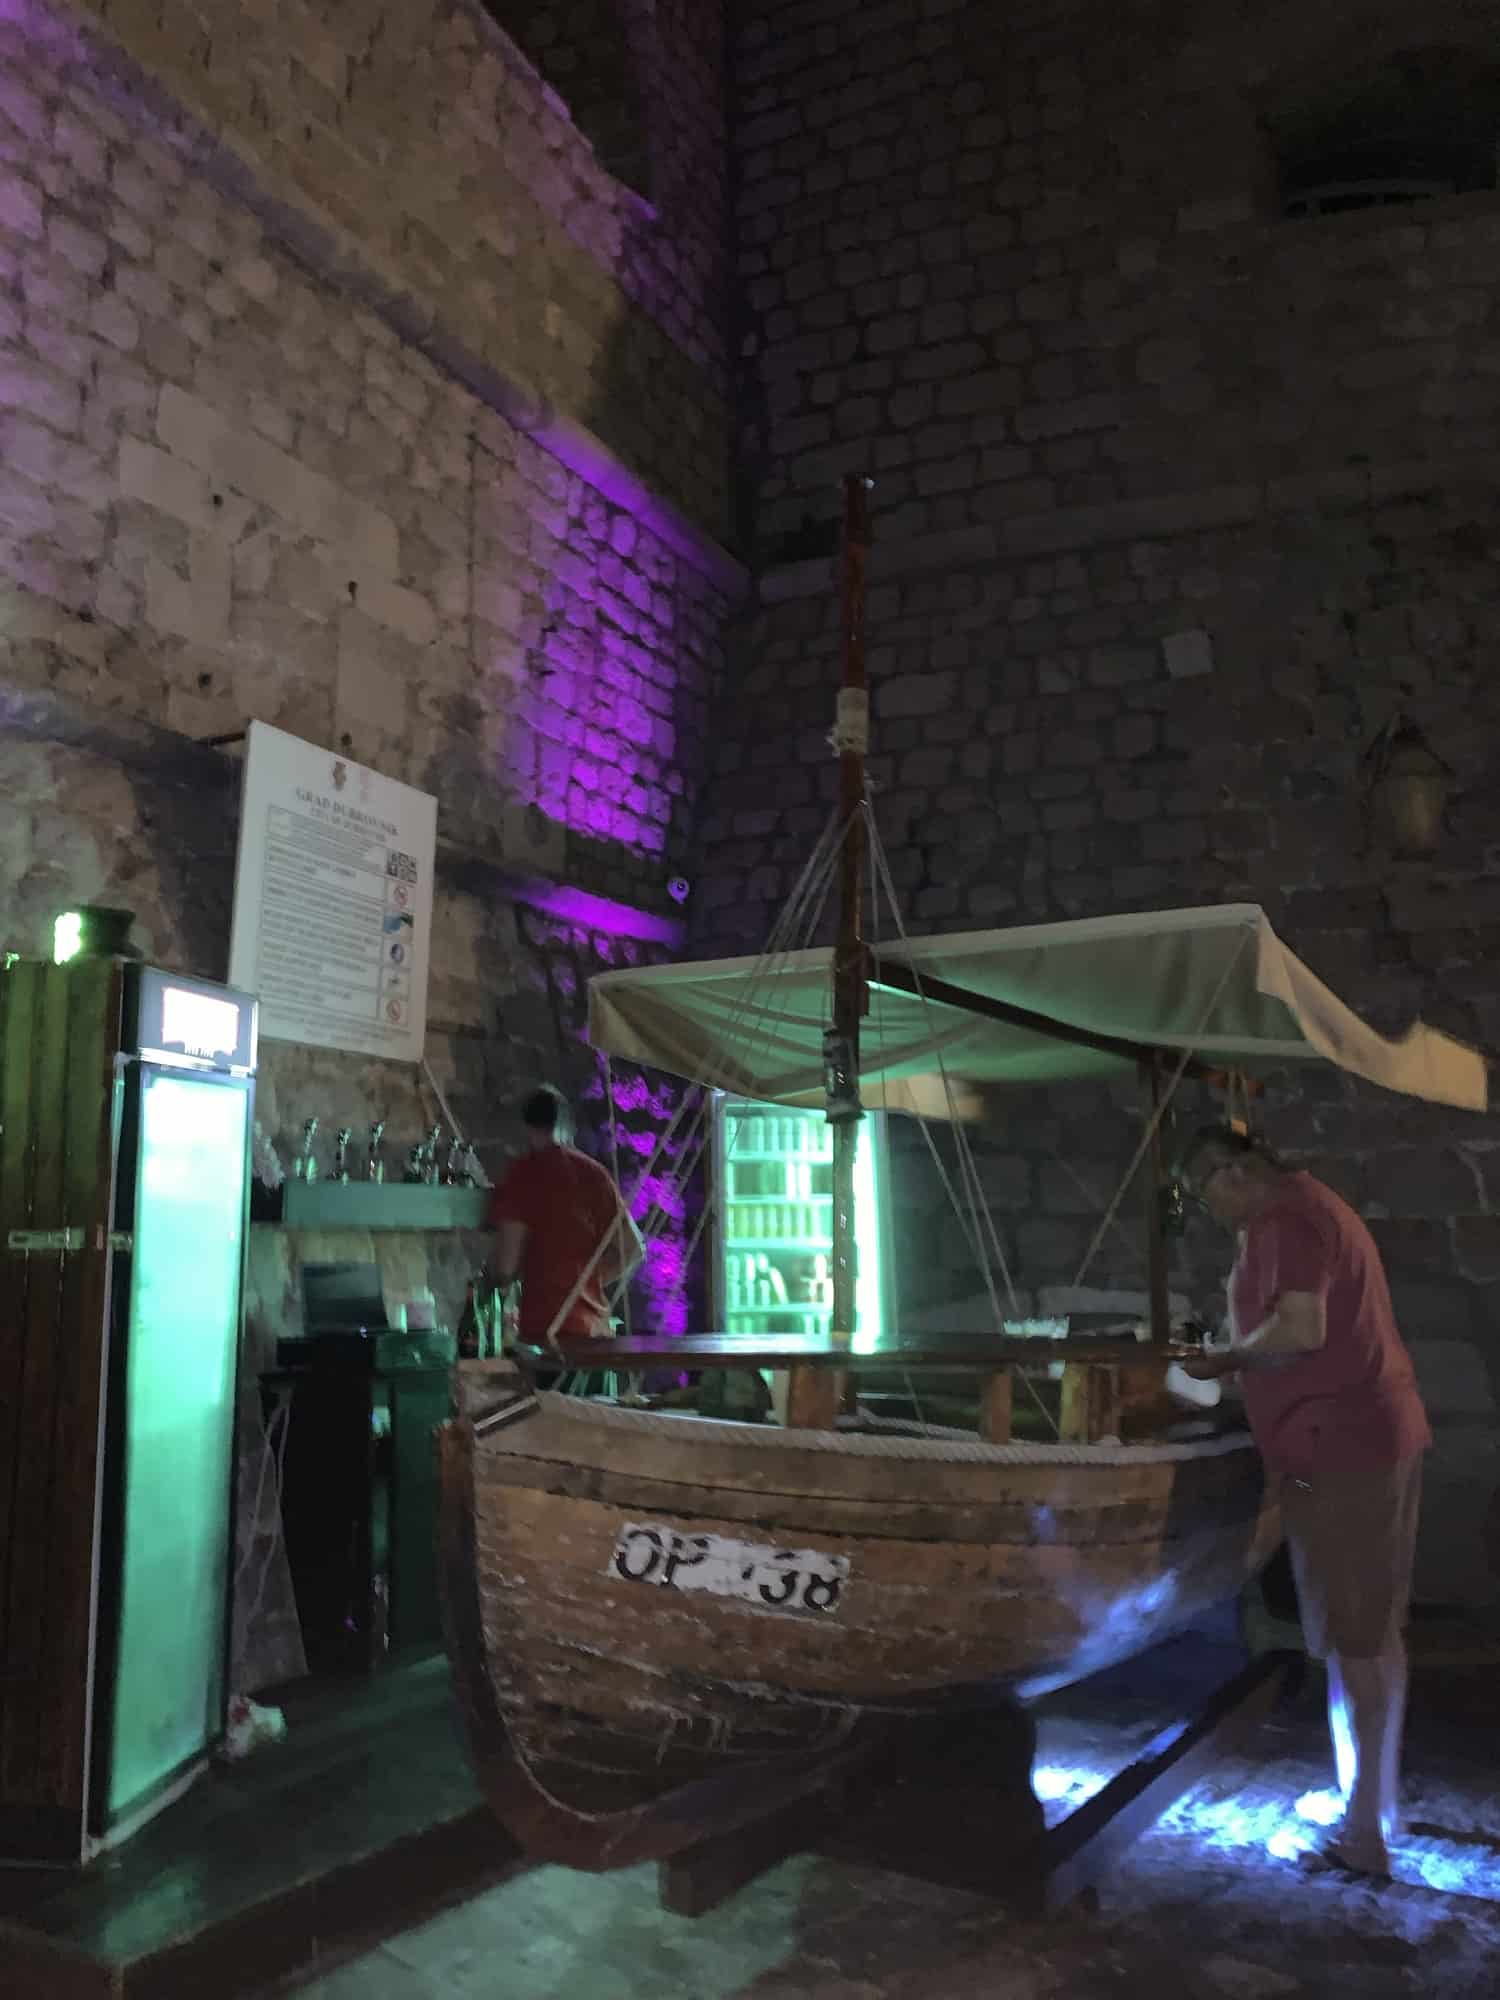 Porporela bar at the old town port